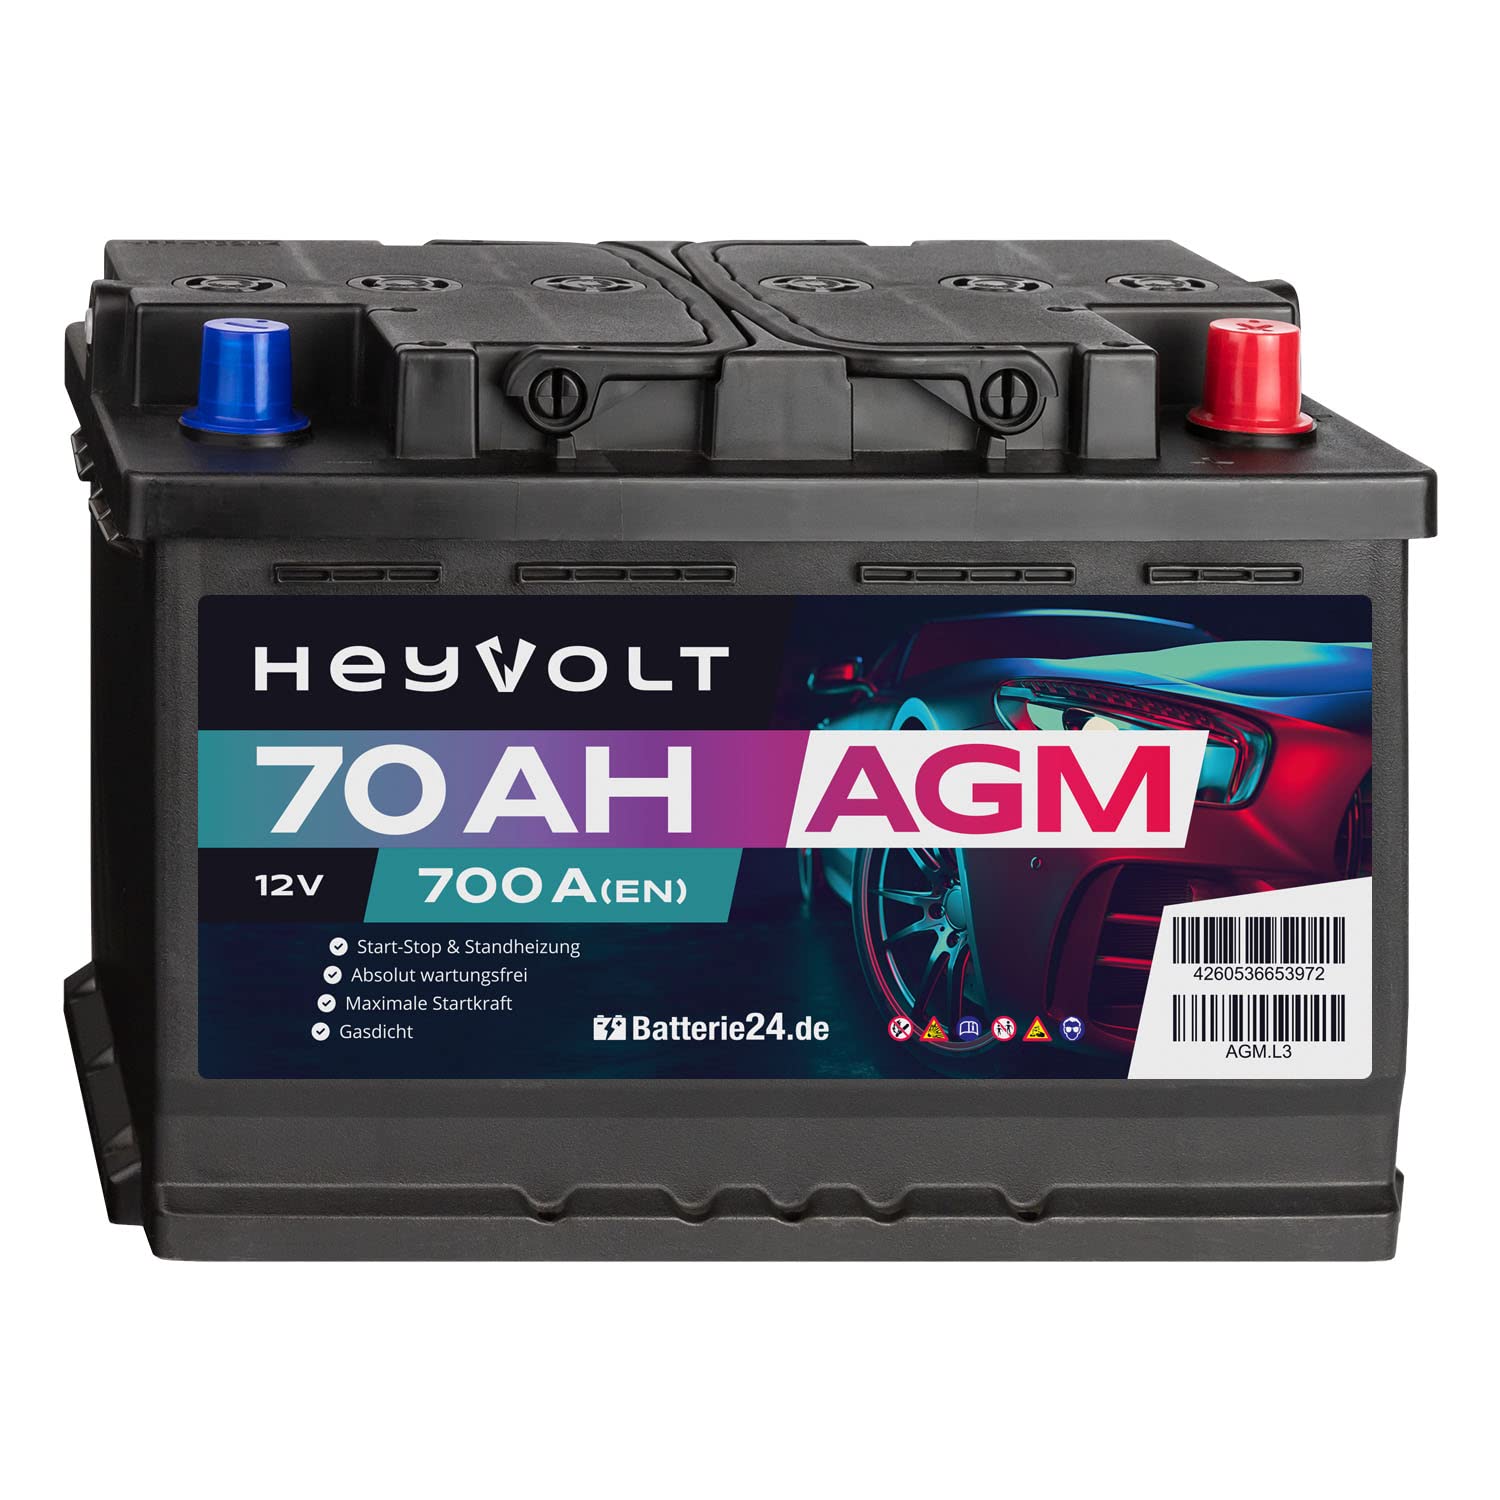 HeyVolt AGM Autobatterie 12V 70Ah 700A/EN Starterbatterie, Start-Stopp & Standheizung geeignet, absolut wartungsfrei von Batterie24.de